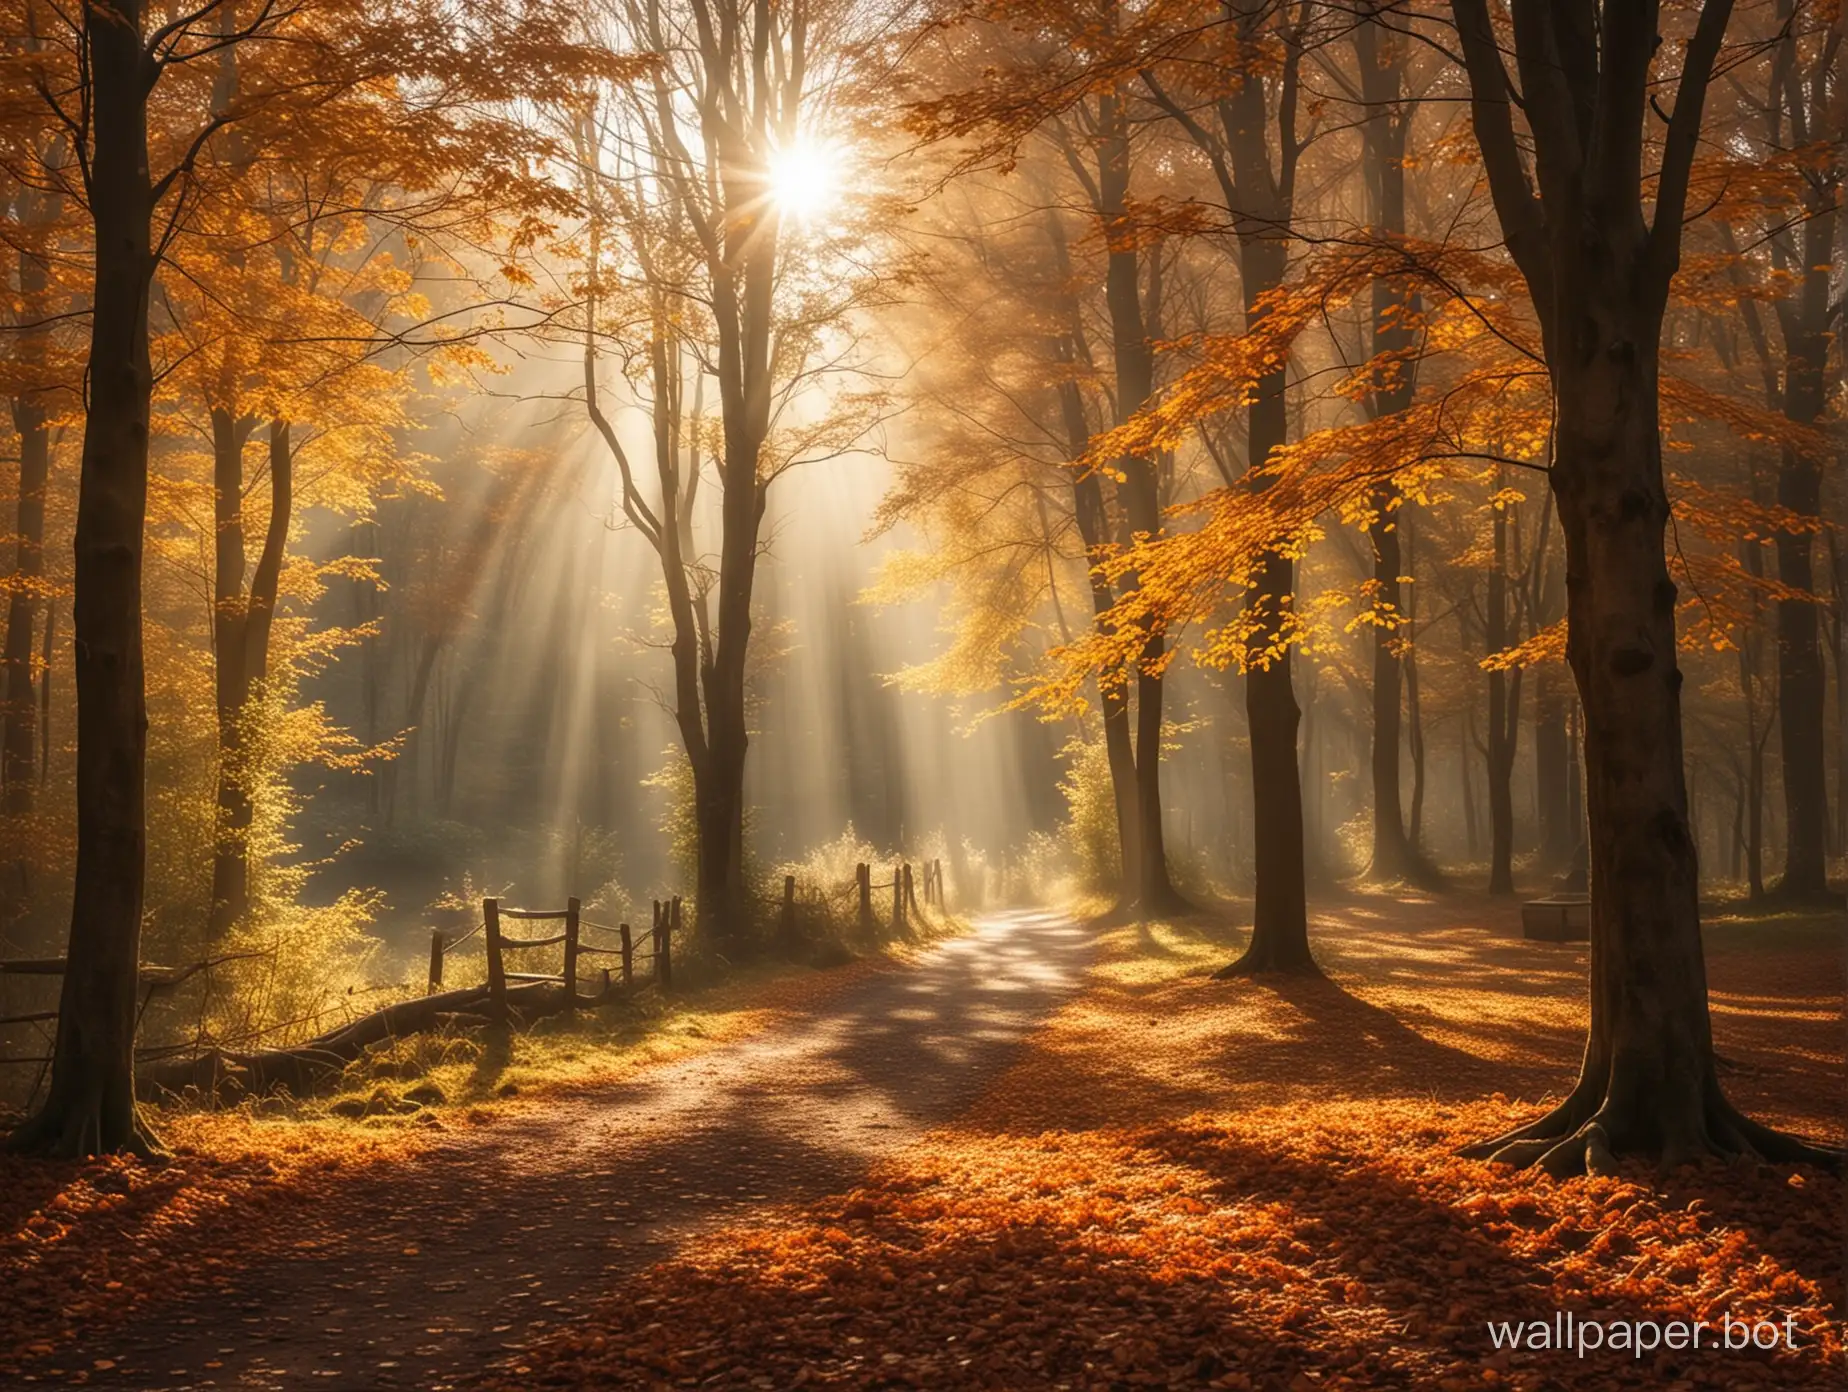 Warm-Autumn-Light-Rays-Illuminating-Cozy-Landscape